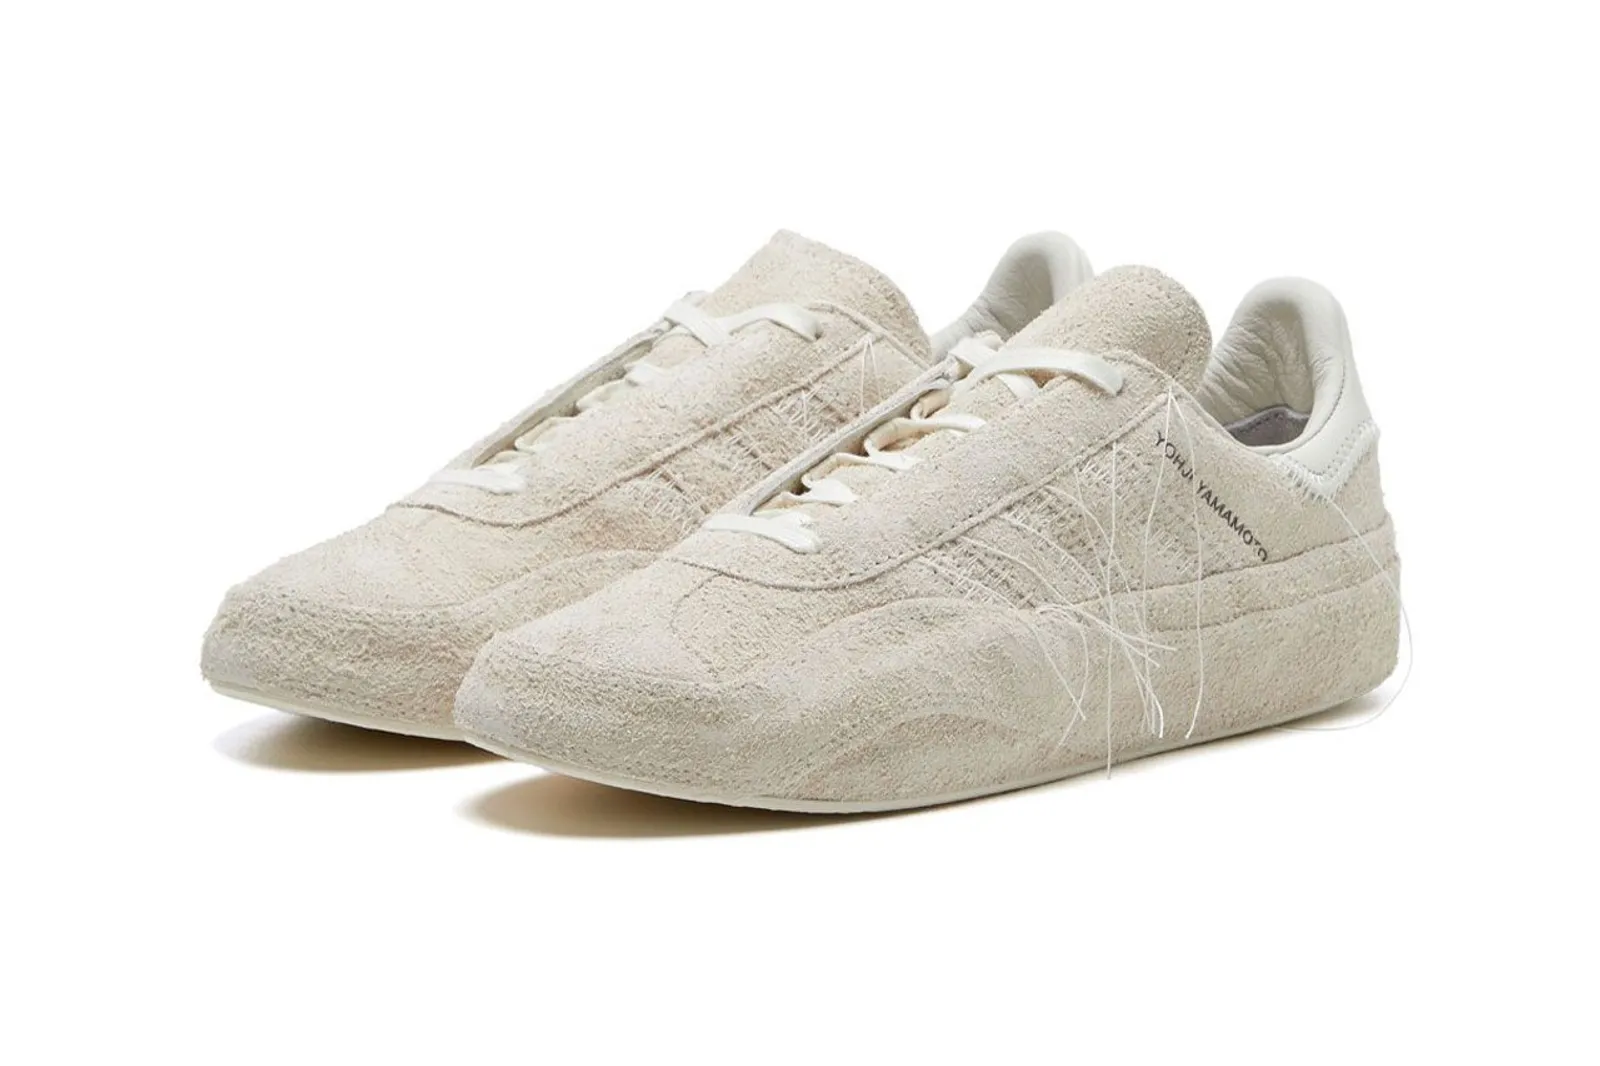 adidas dan Y-3 Rilis Sneaker Gazelle Berdetail Edgy!